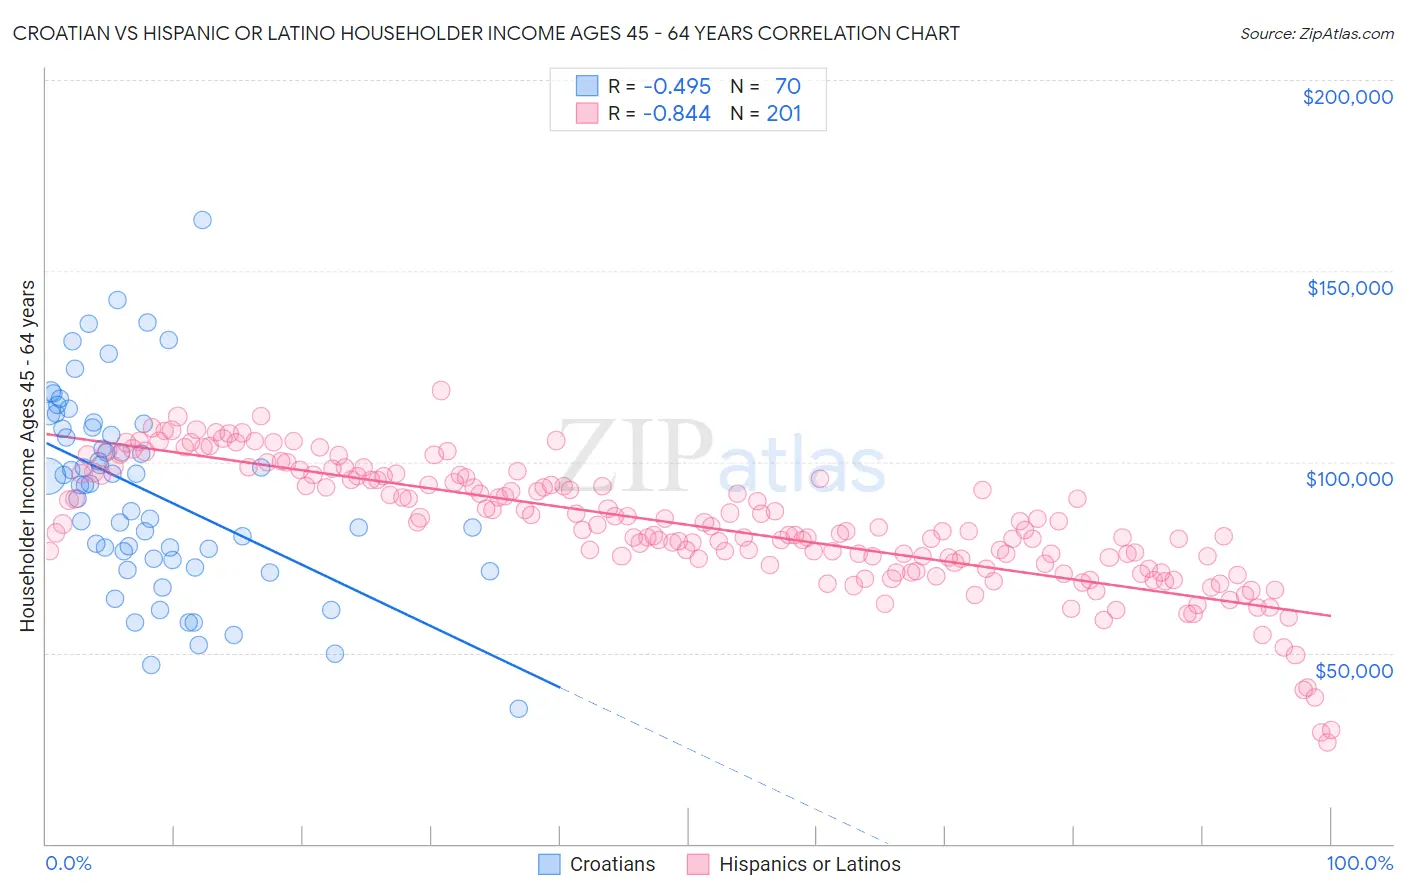 Croatian vs Hispanic or Latino Householder Income Ages 45 - 64 years